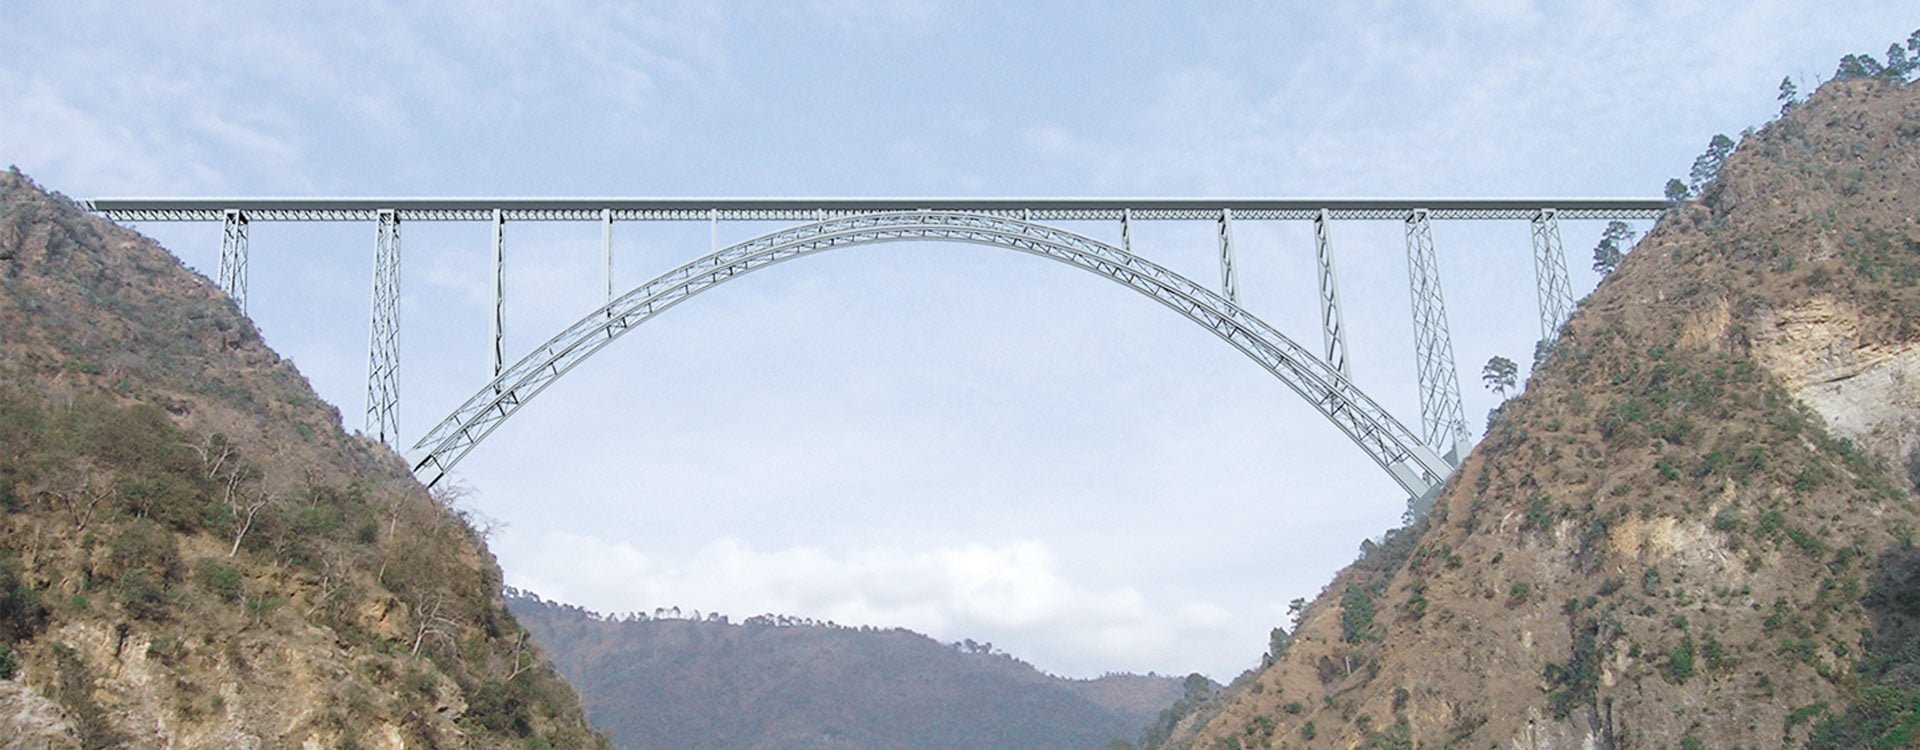 -Bridge_Transport-and-Infrastructure